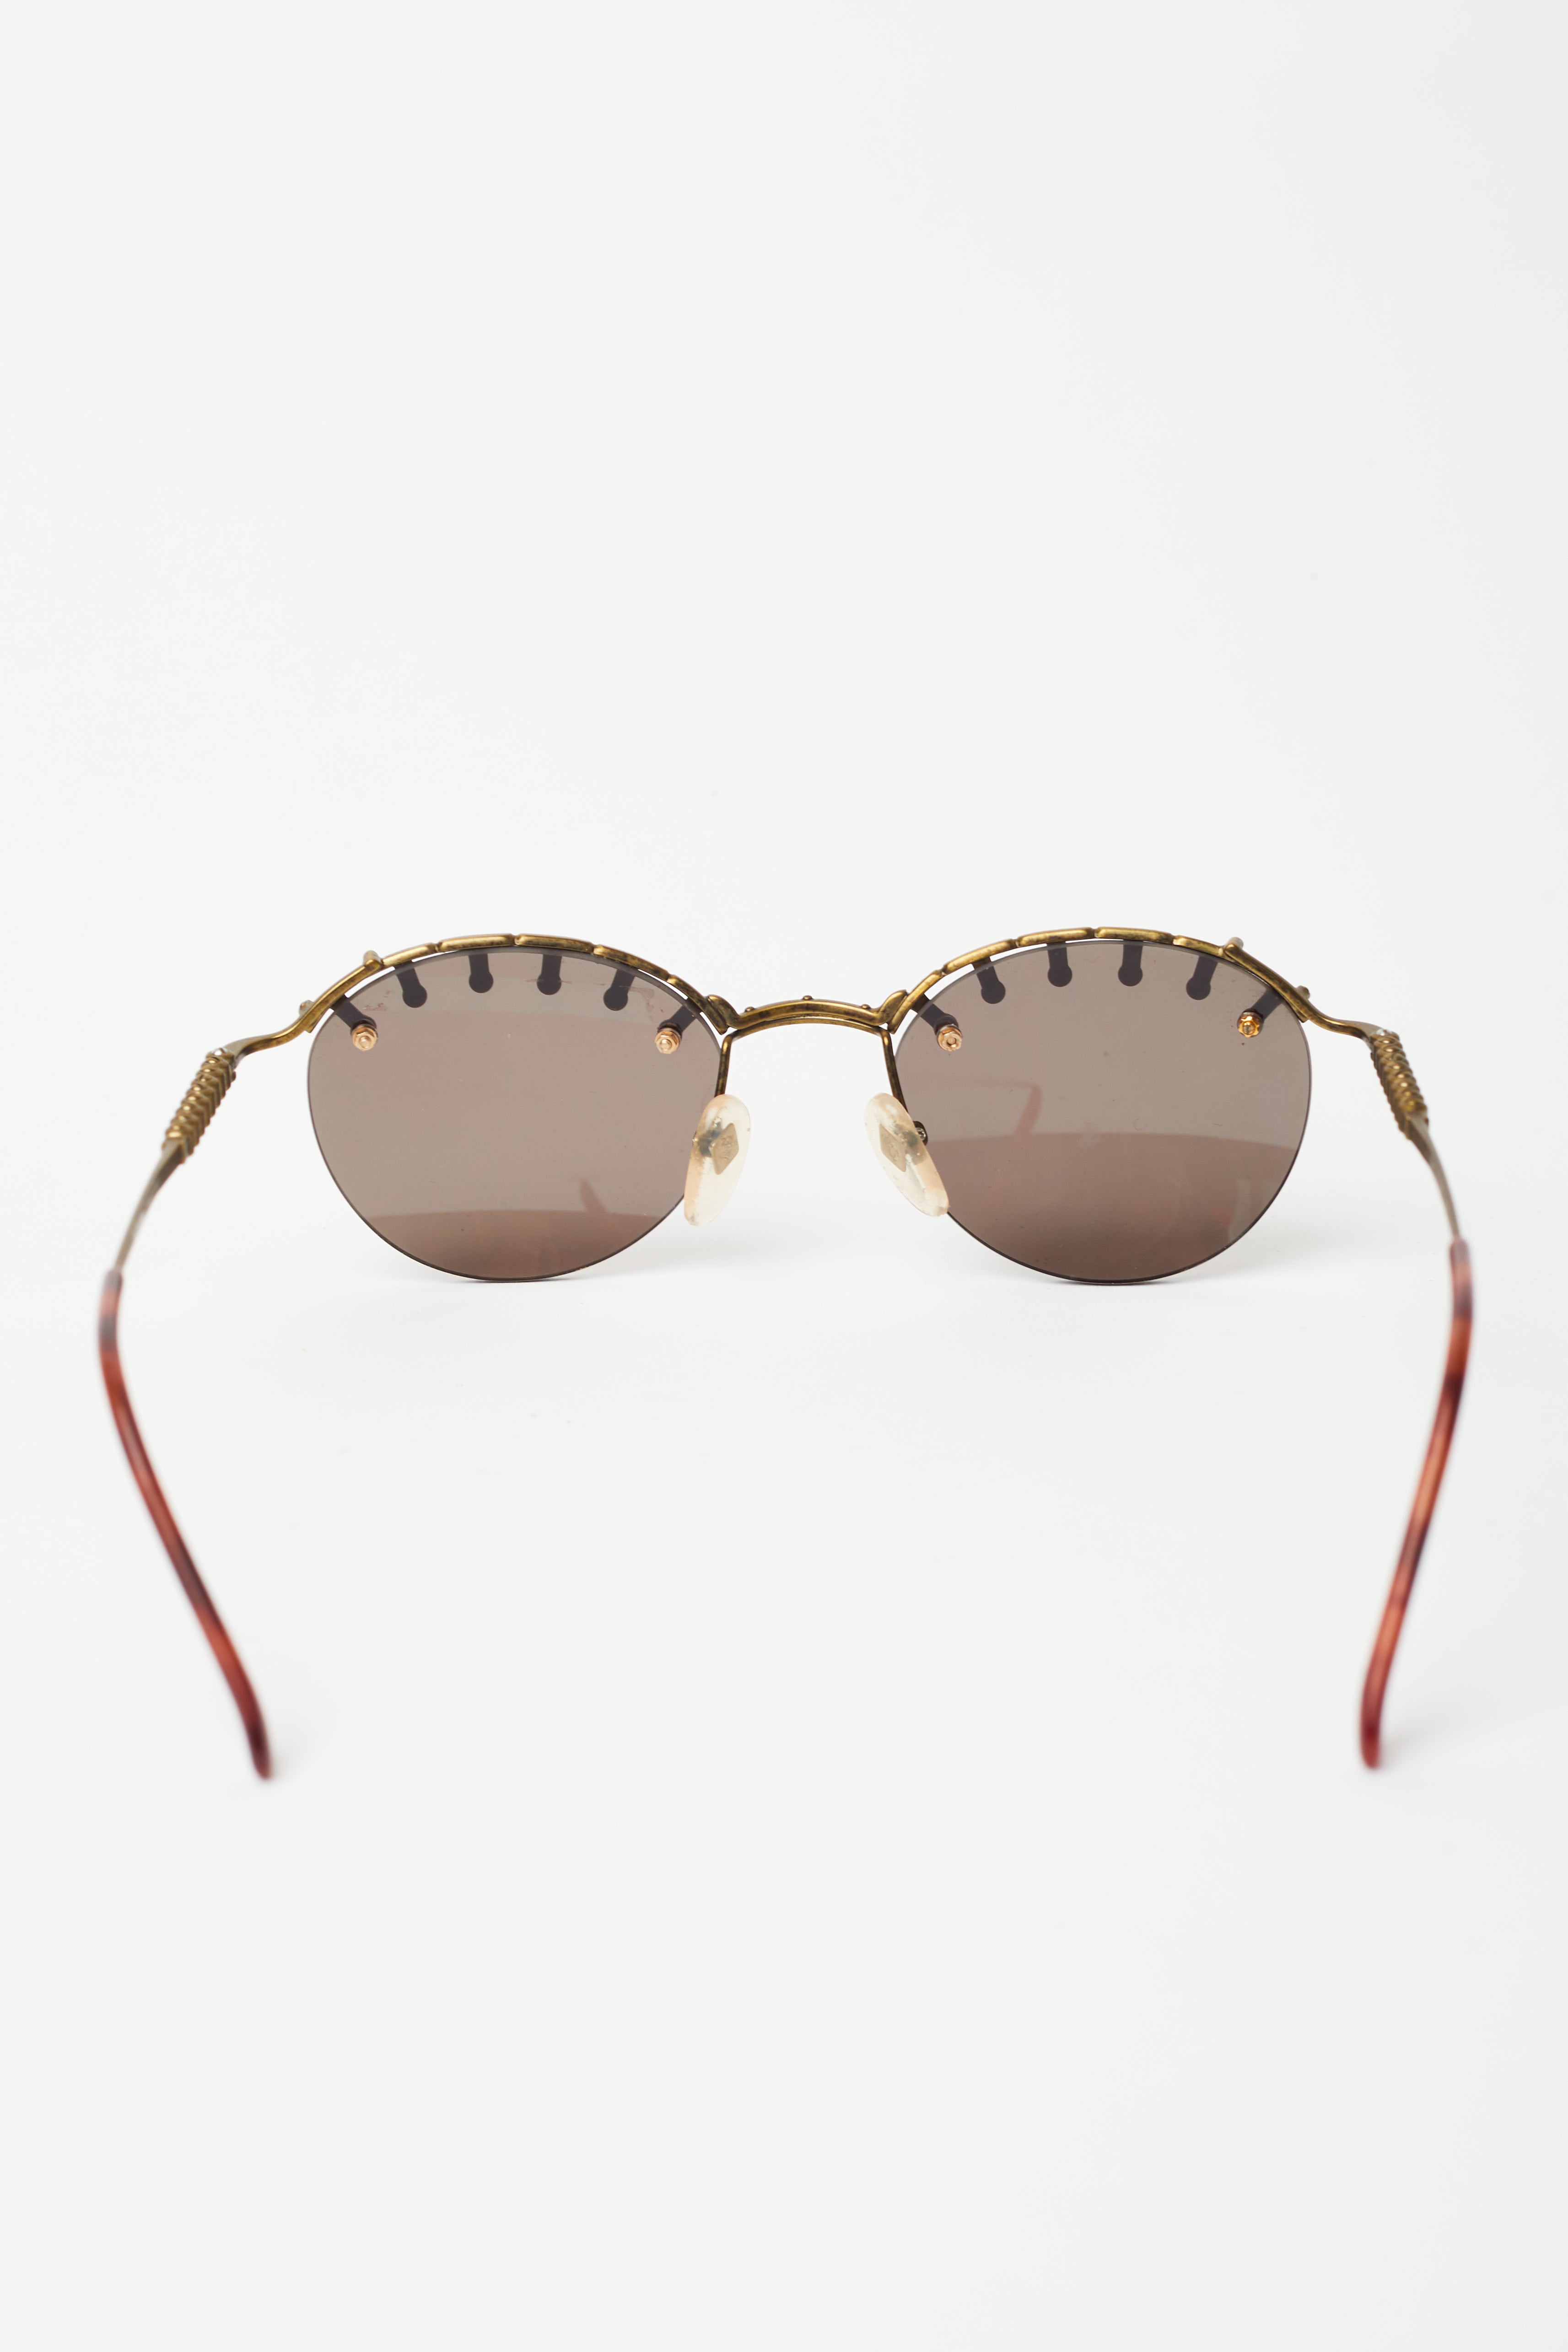 Jean Paul Gaultier <br> Deadstock 80's/90's metal frame rimless sunglasses